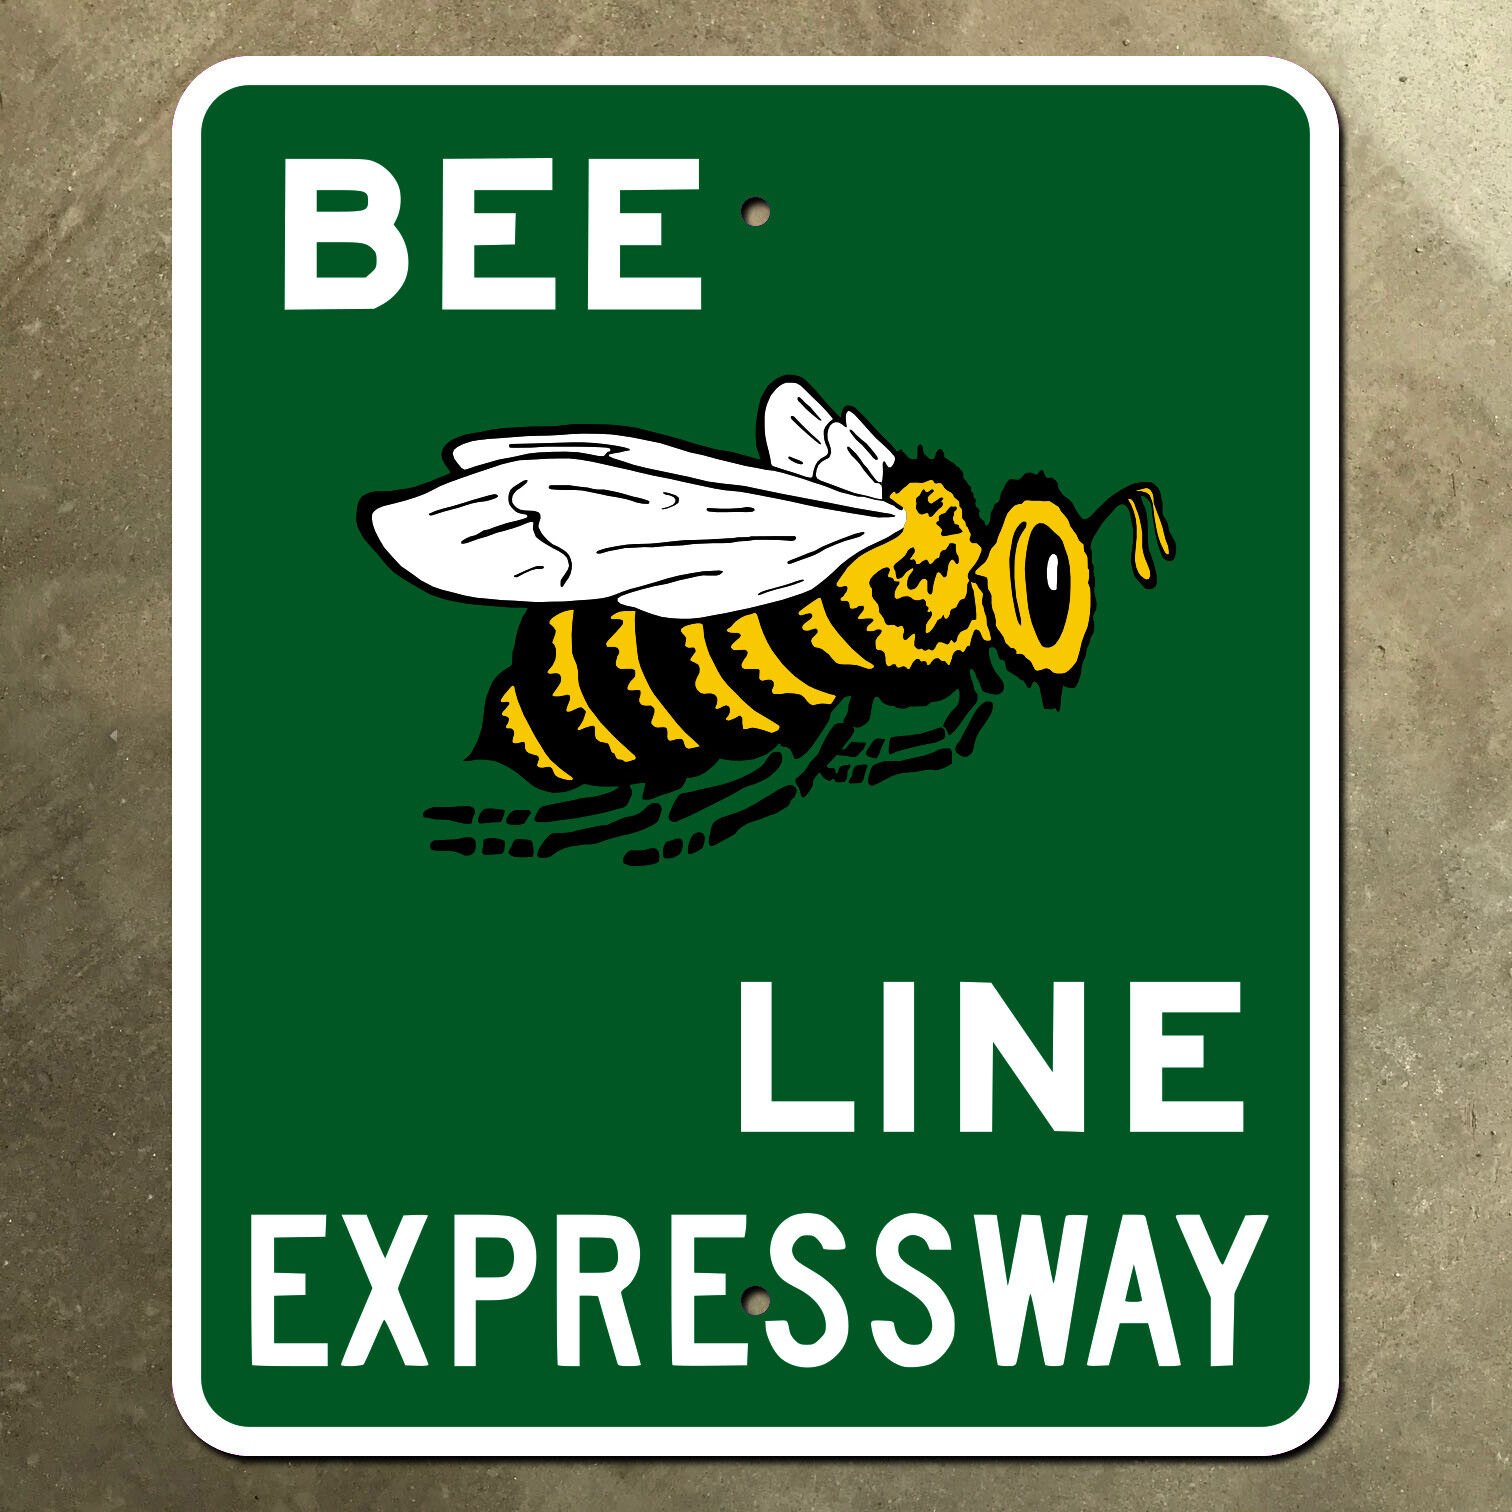 Florida Bee Line Expressway Beachline Orlando highway marker road sign 15x18